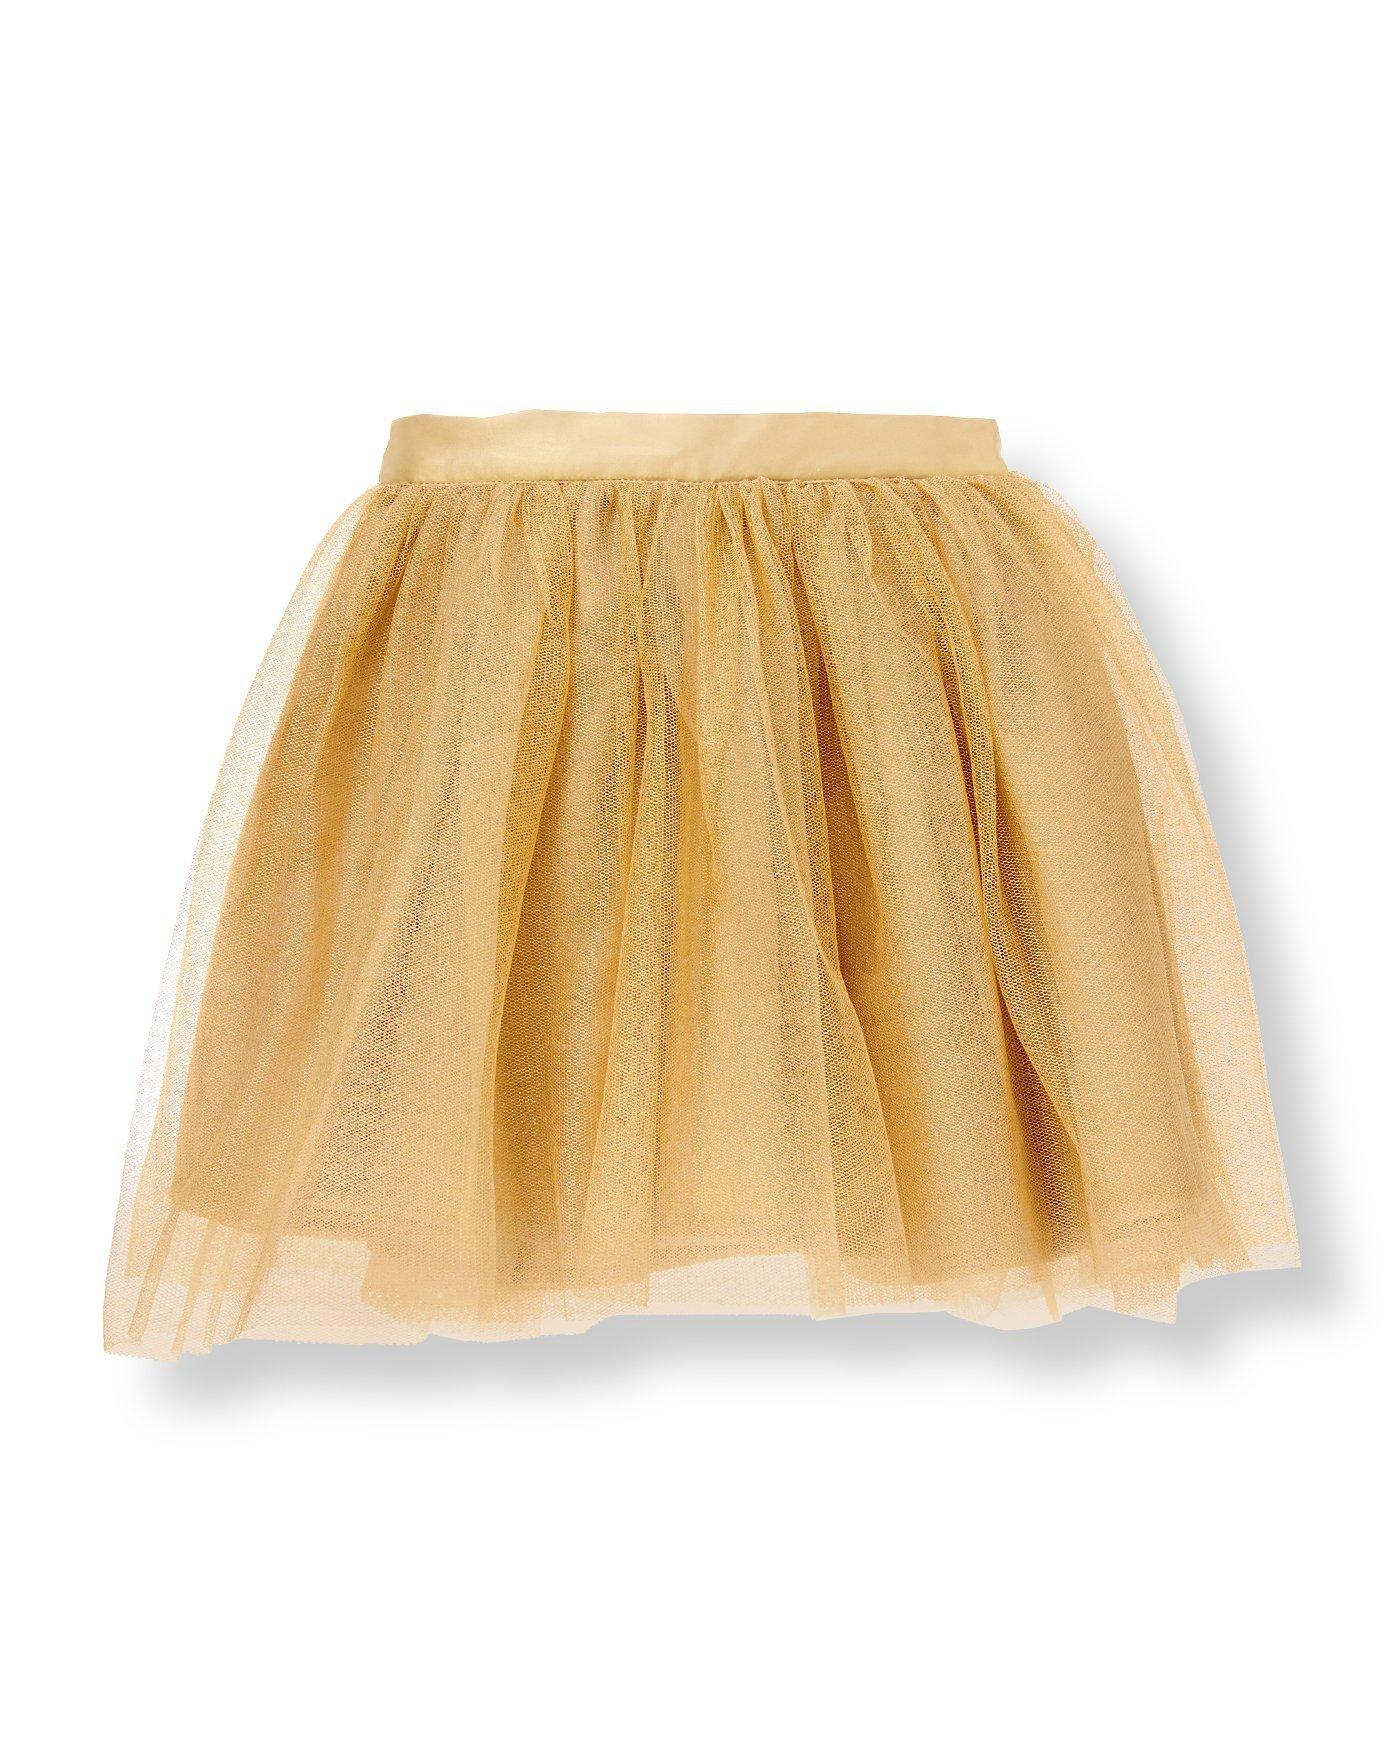 Metallic Gold Tulle Skirt image number 0